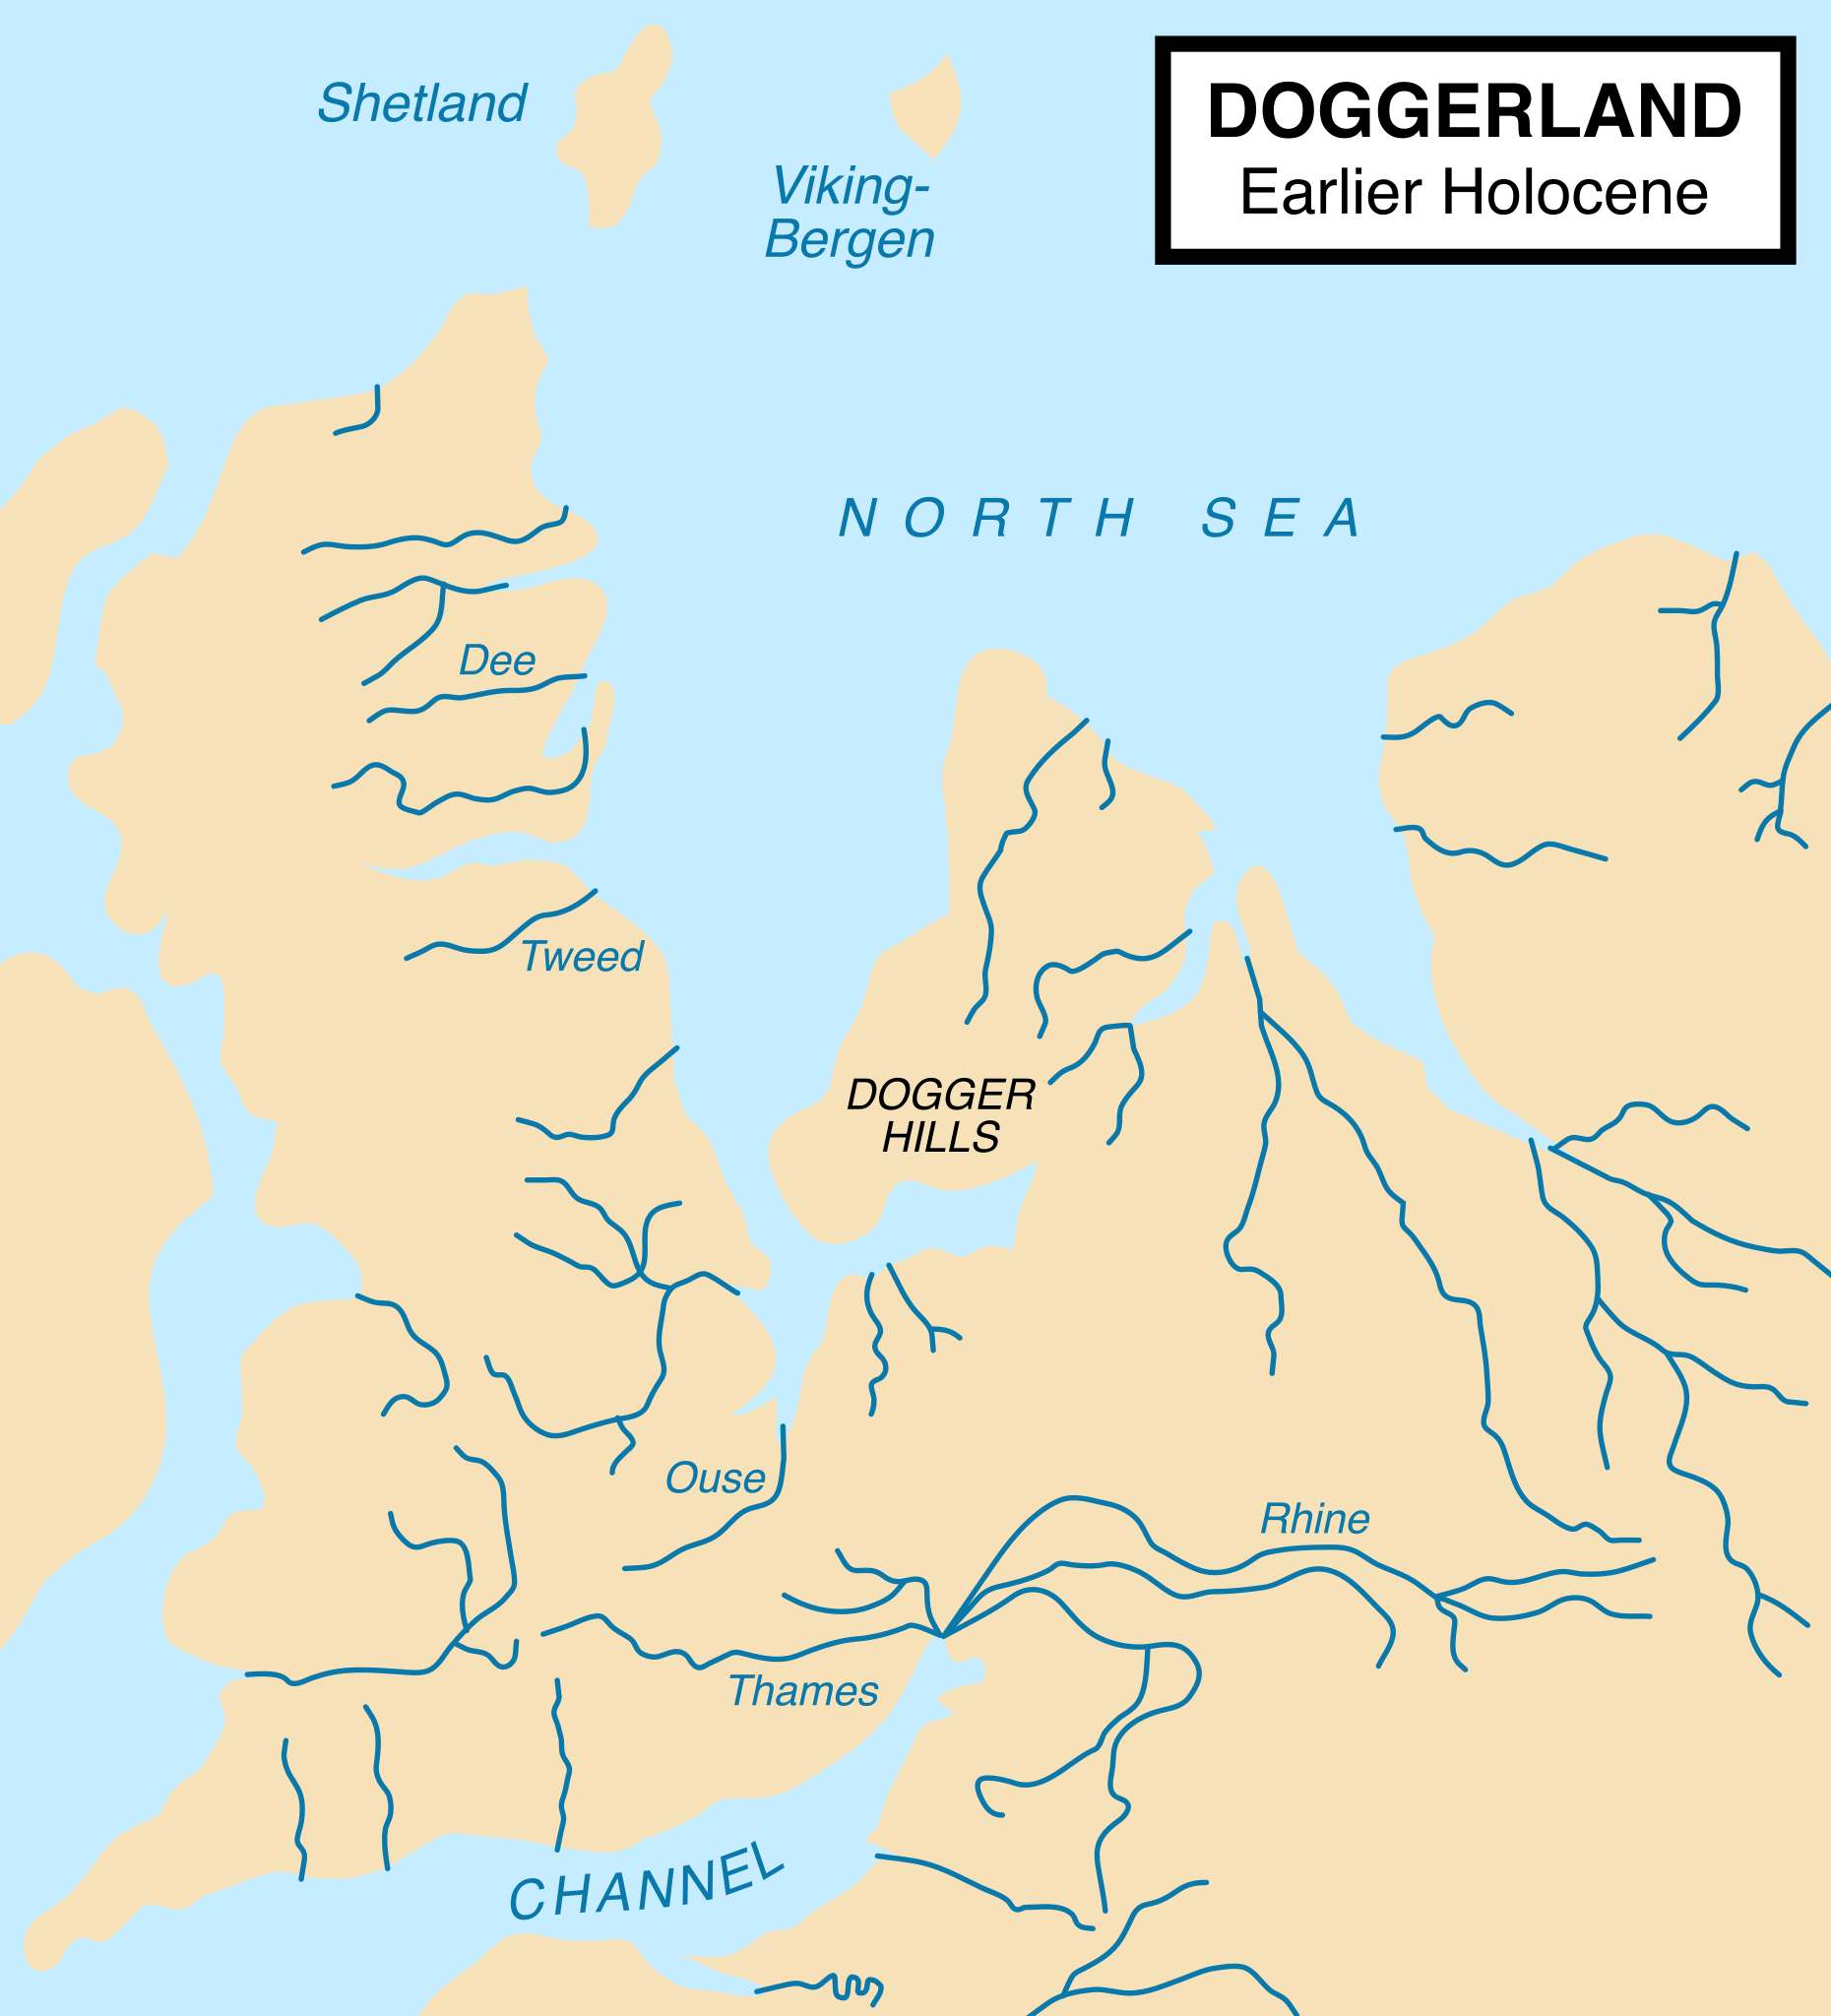 Prehistoric Doggerland: The secrets of the Atlantis of Britain 3